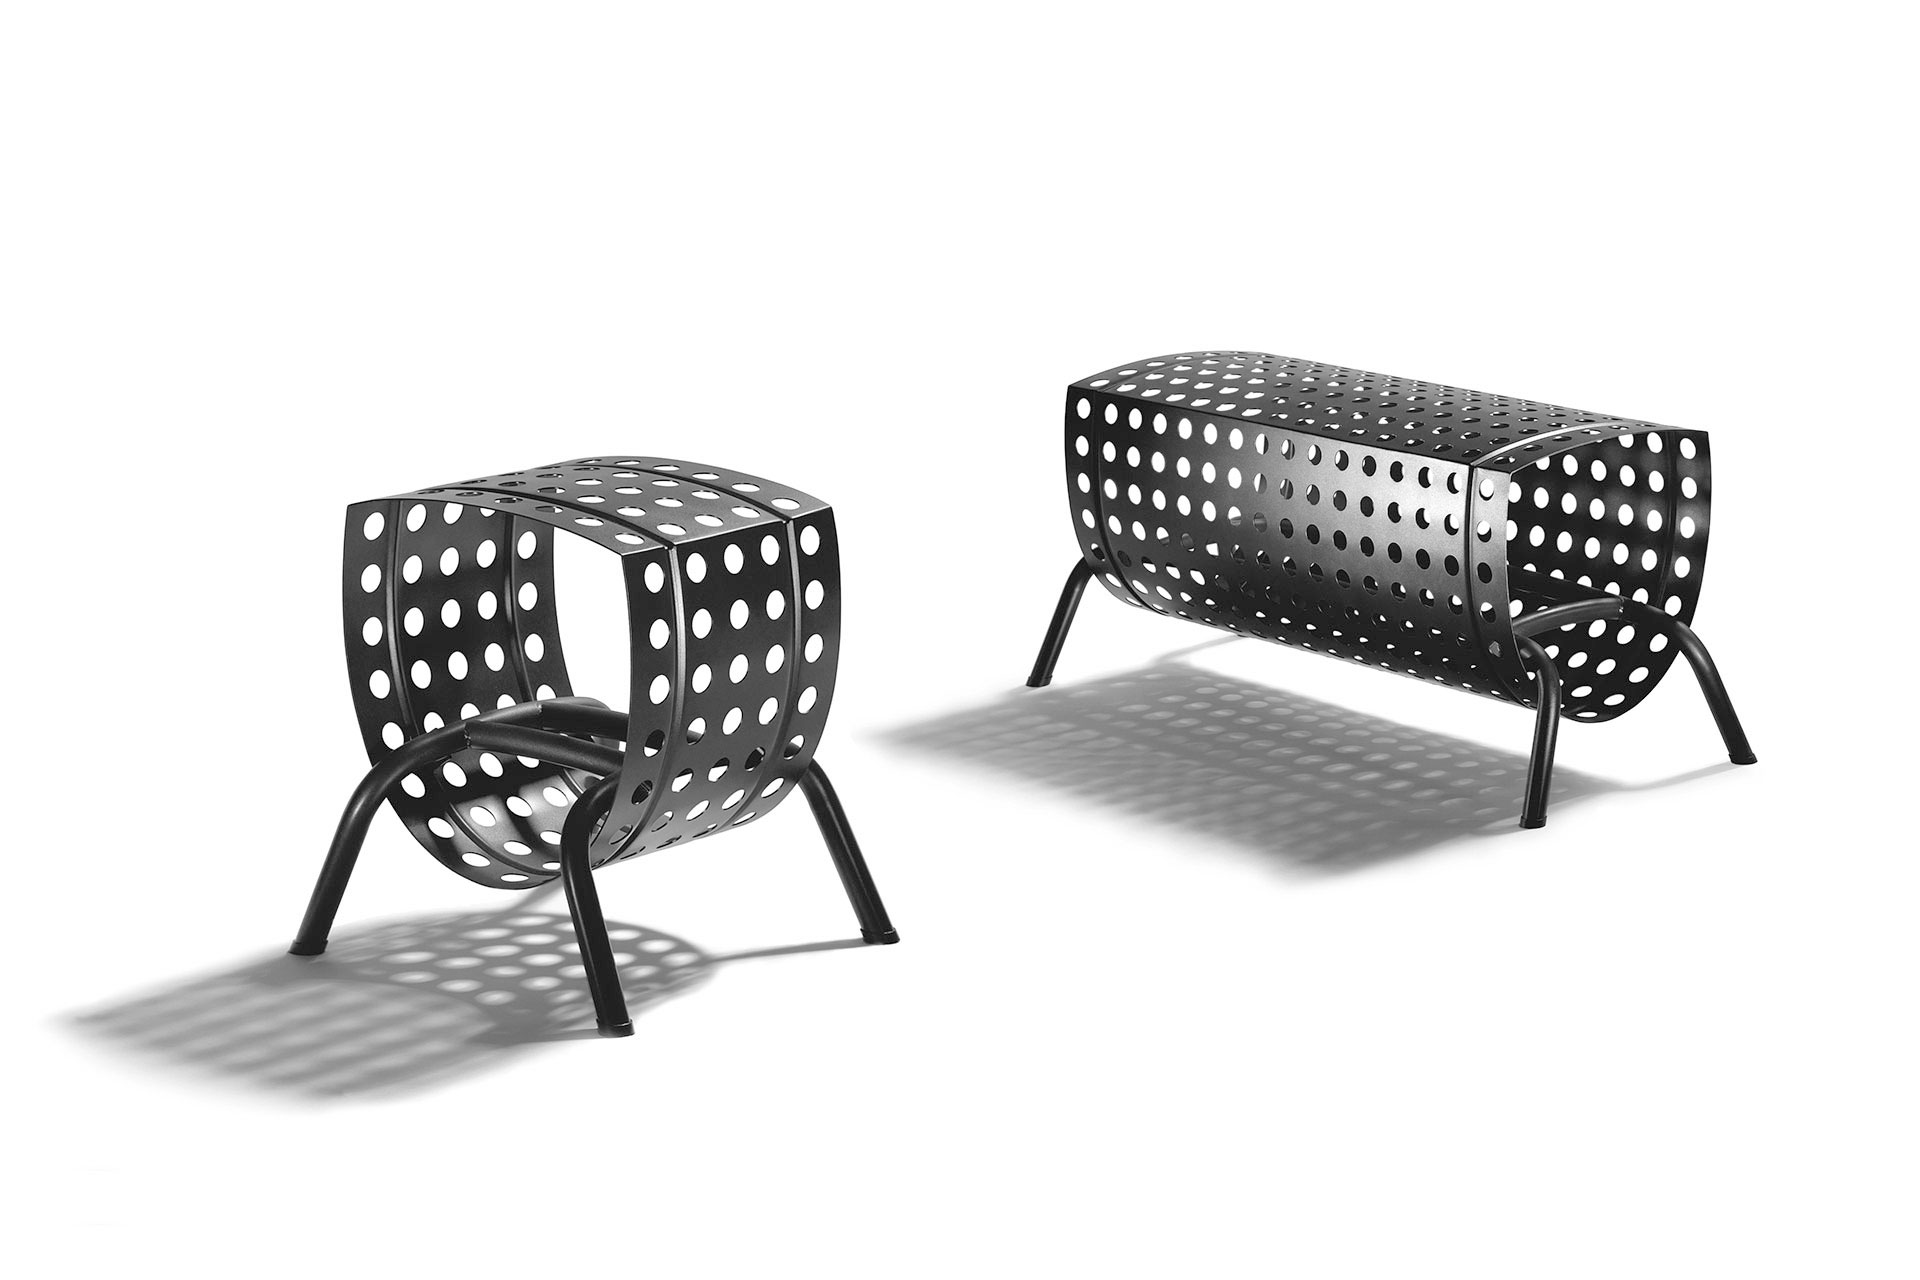 Turtle stool and bench. Sheet metal design. Design architect Ulrik Blomquist. Photo: Åke Gunnarsson / VUE, Jacob Gils, www.jacobgils.com